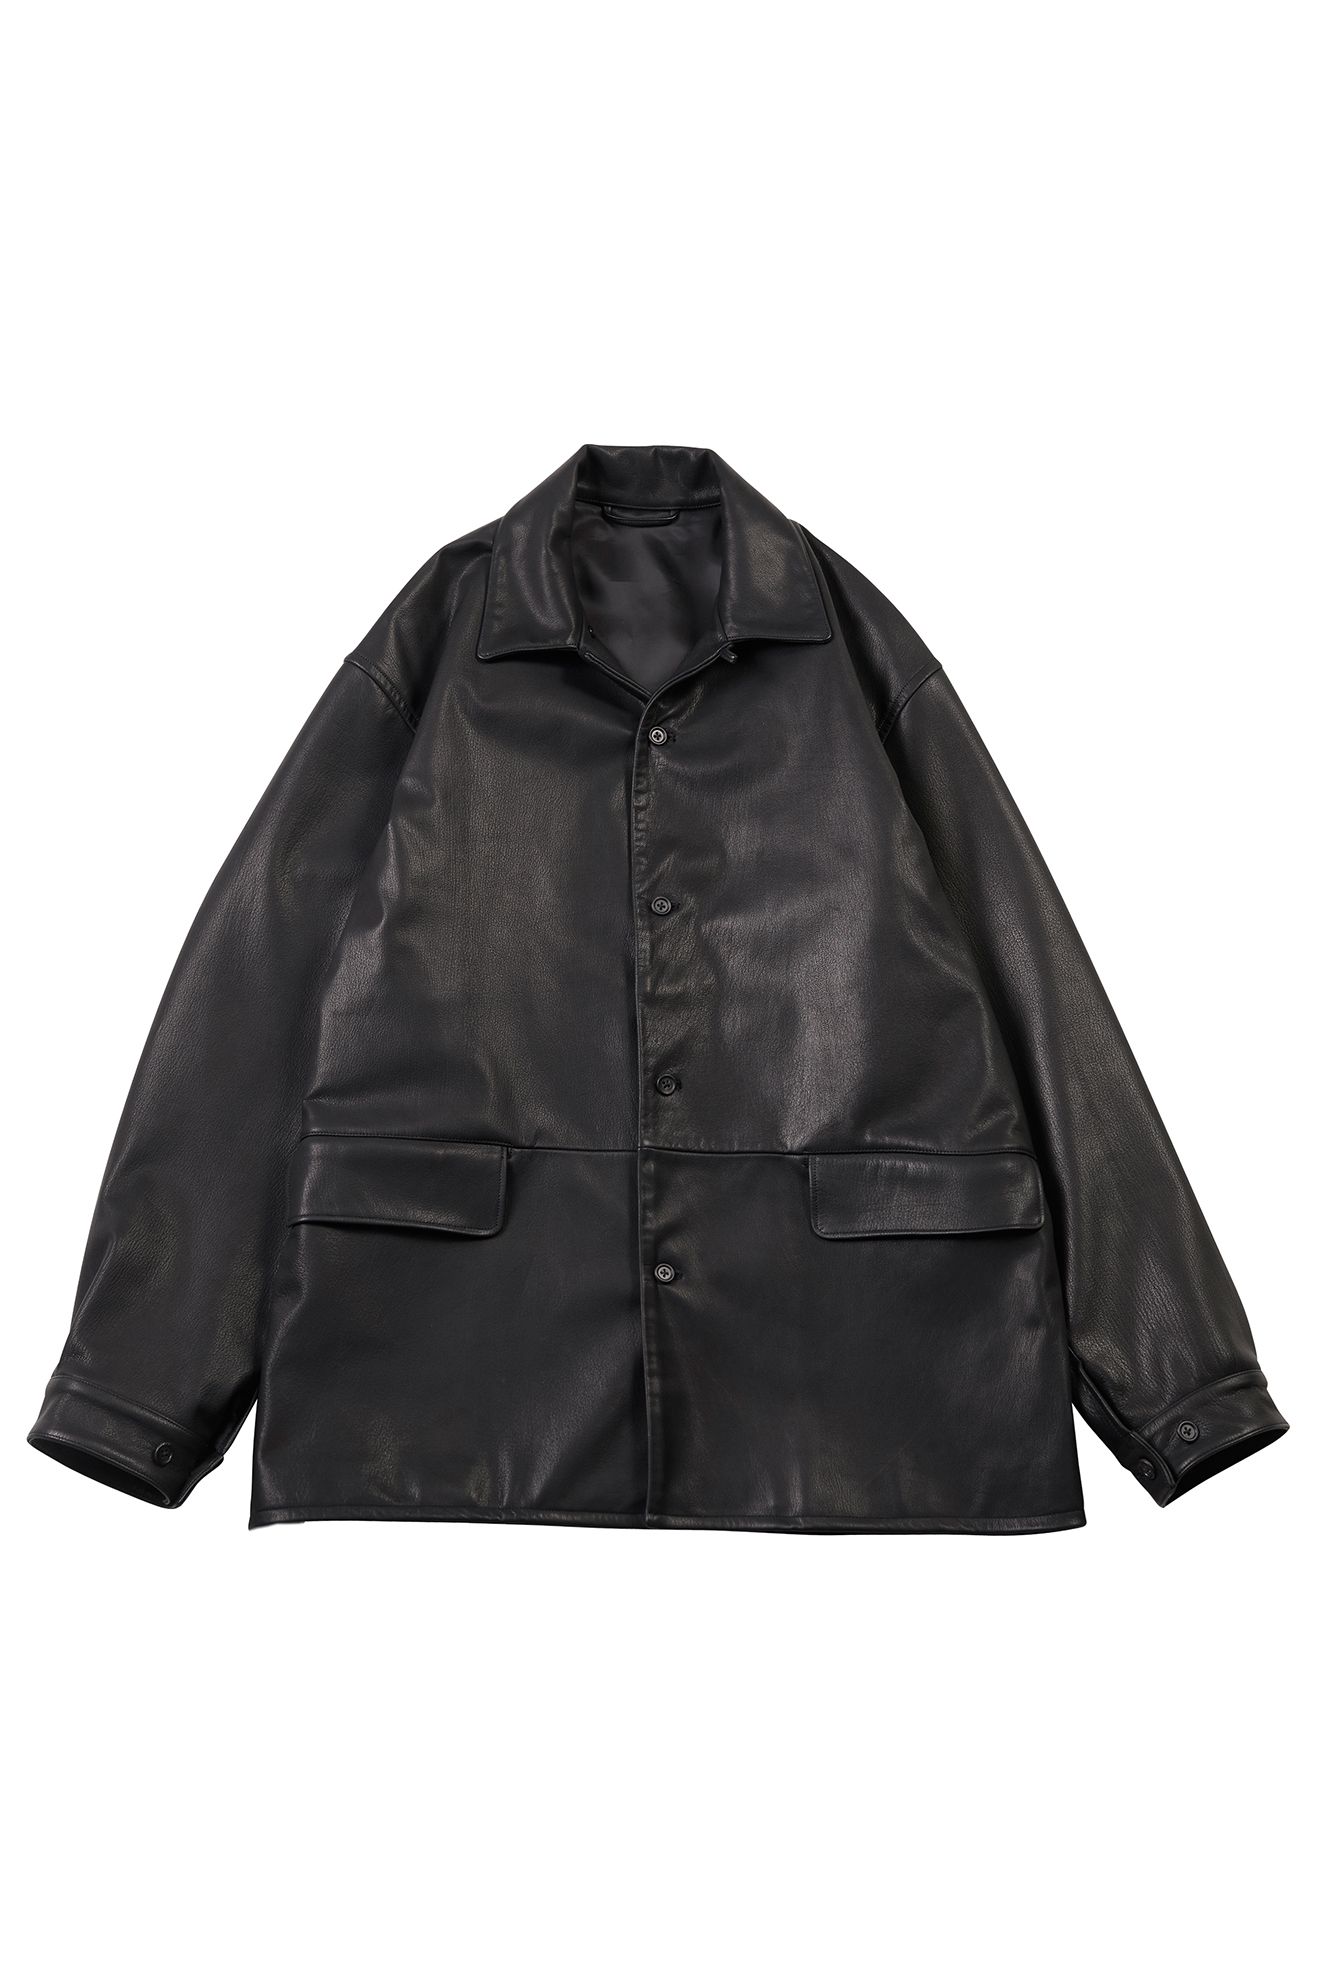 blurhms - goat leather jacket 22aw men | asterisk